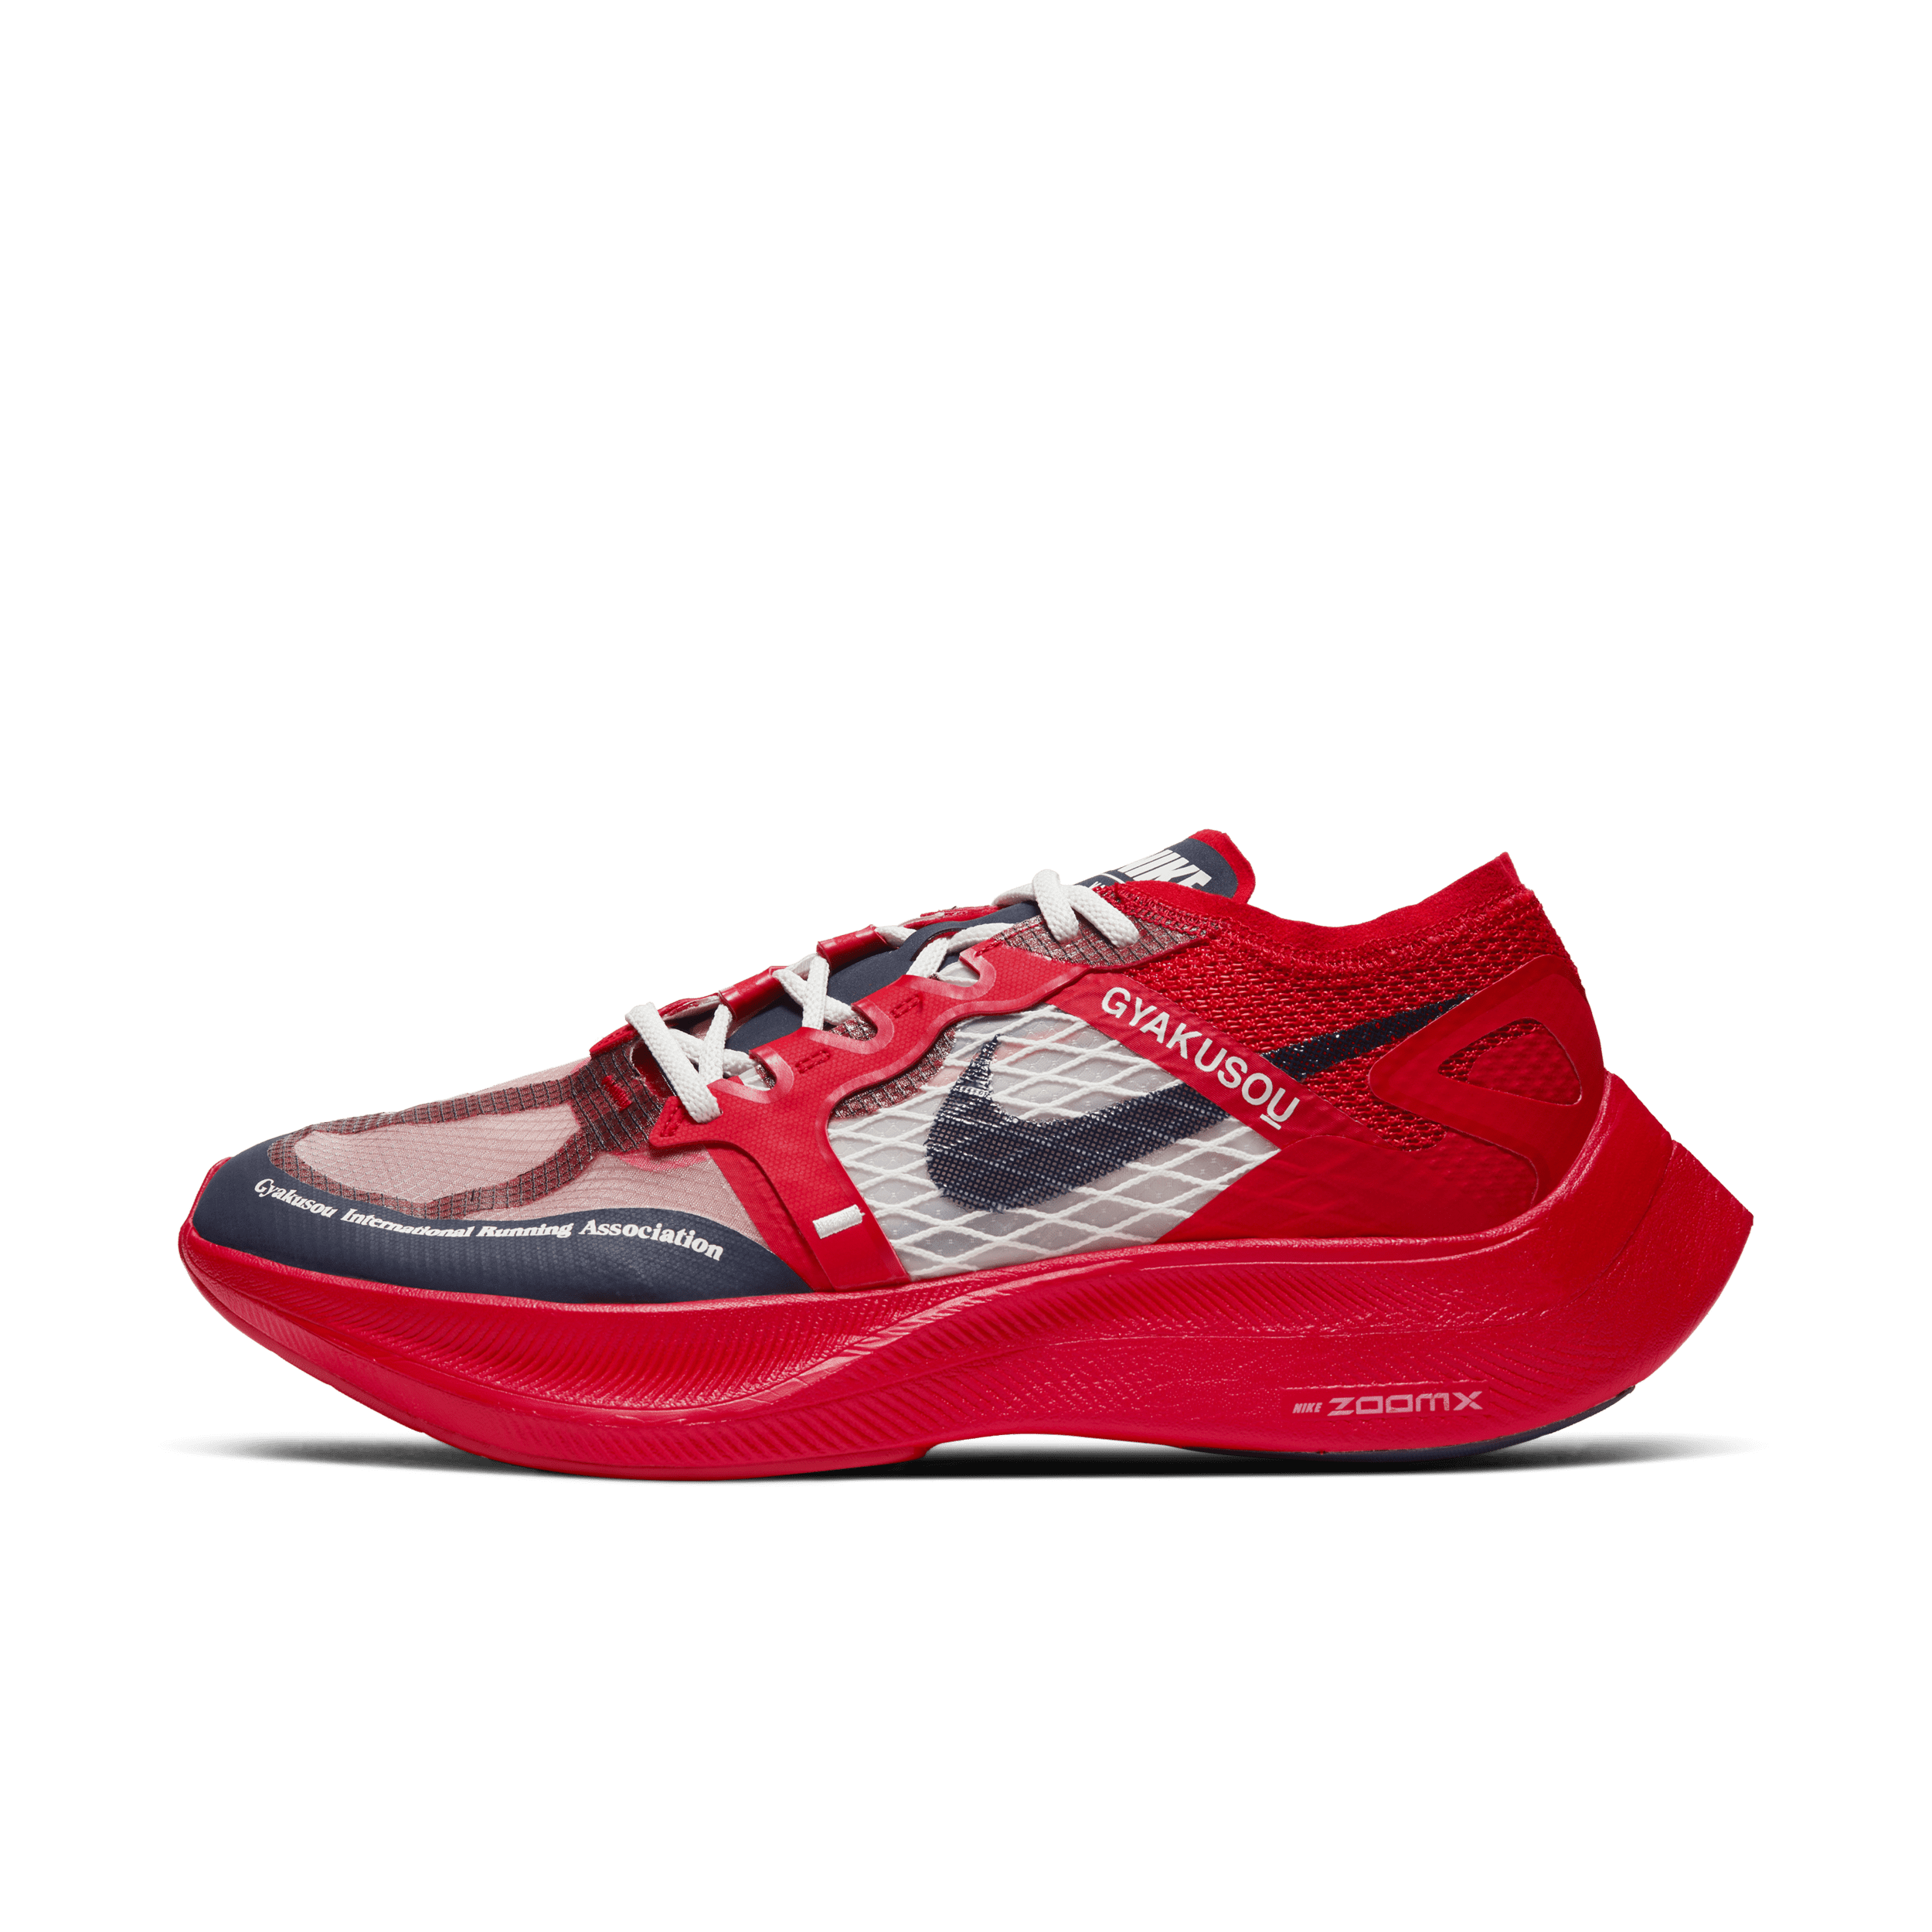 Nike ZoomX Vaporfly Next% x Gyakusou Zapatillas de running - Rojo